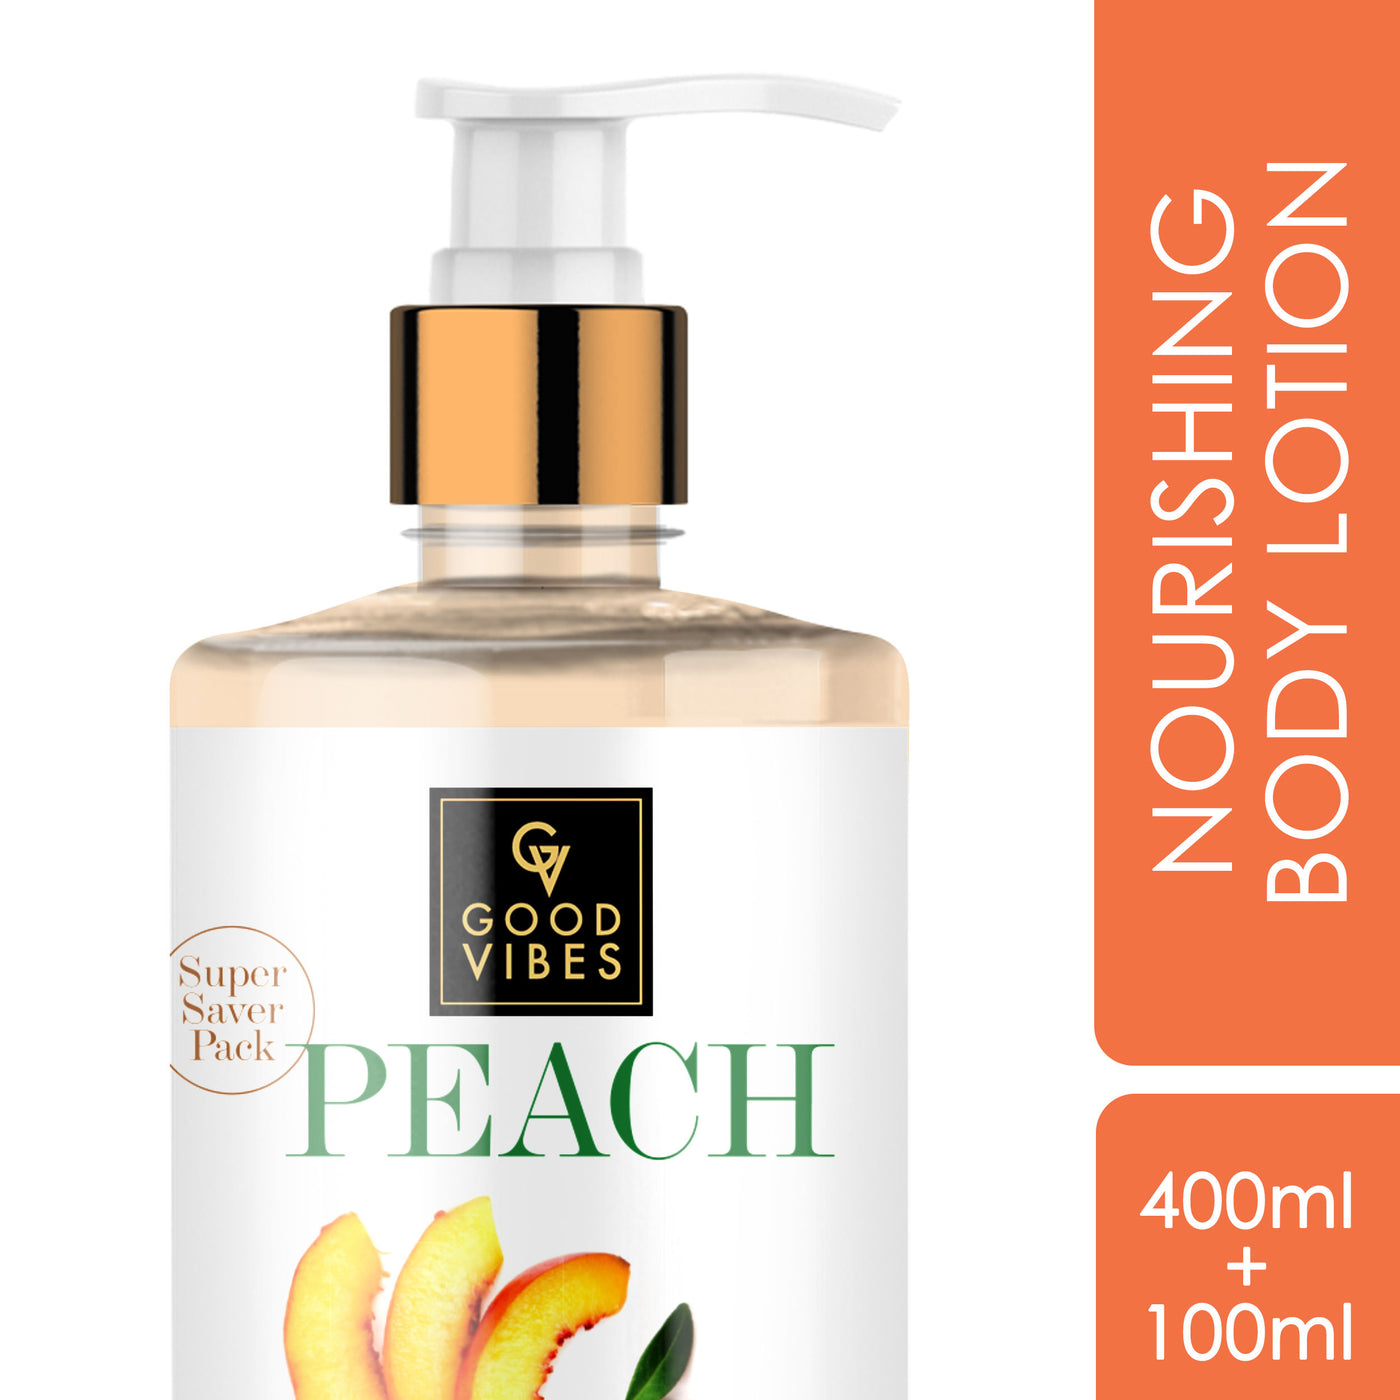 good-vibes-peach-nourishing-body-lotion-400ml-100-ml-free-1-37-1